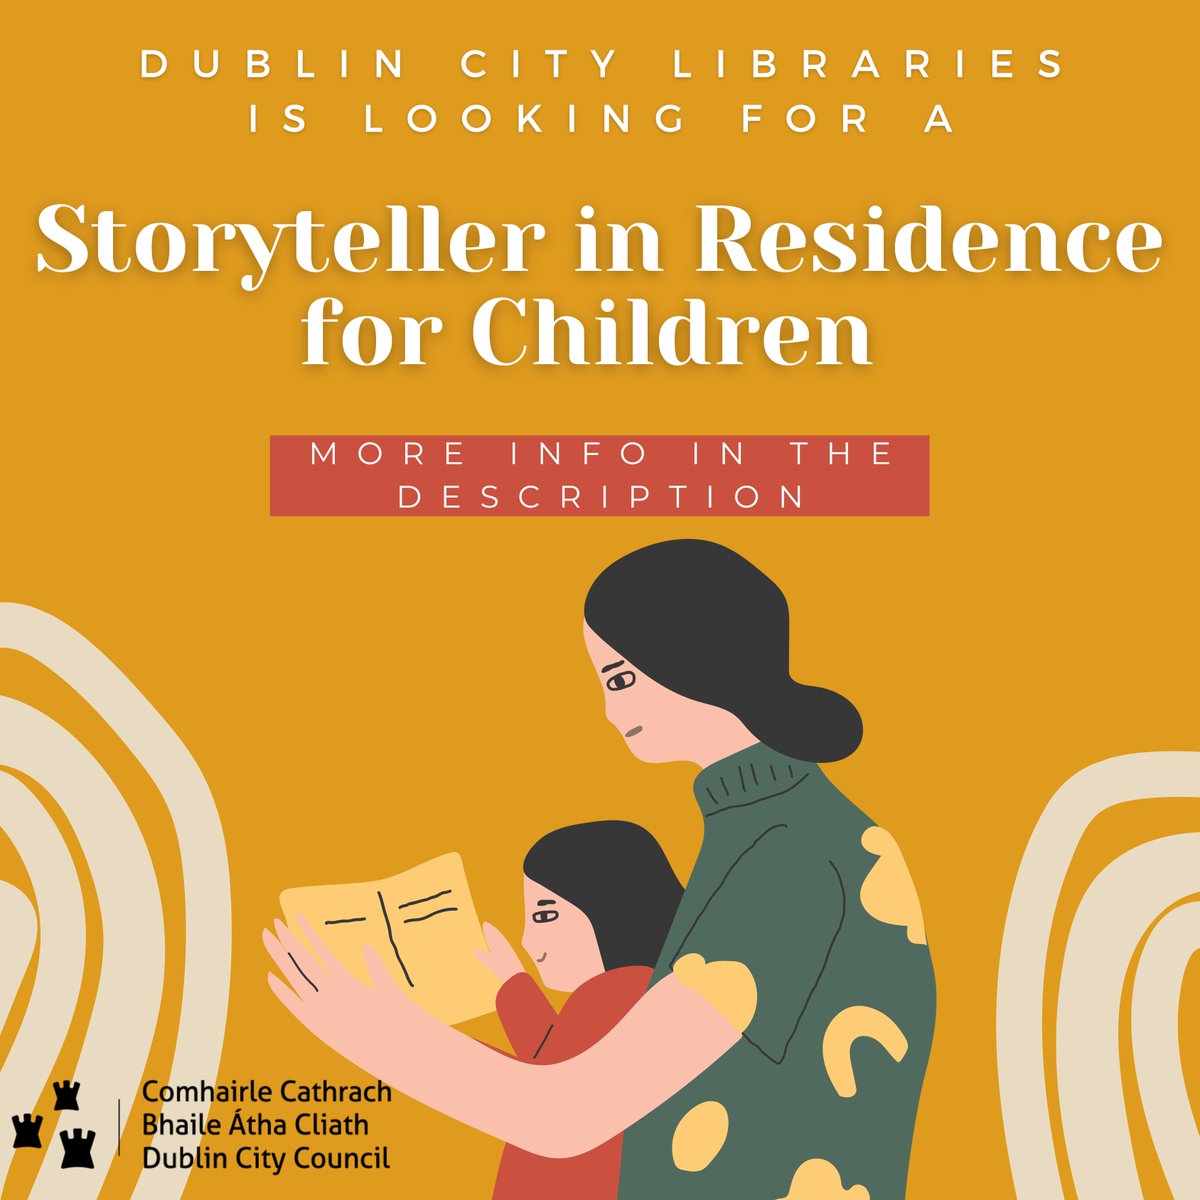 More info and how to apply here: dublincity.ie/library/blog/s…

#storyteller #dublincitycouncil #dublincitylibraries #dorasbui